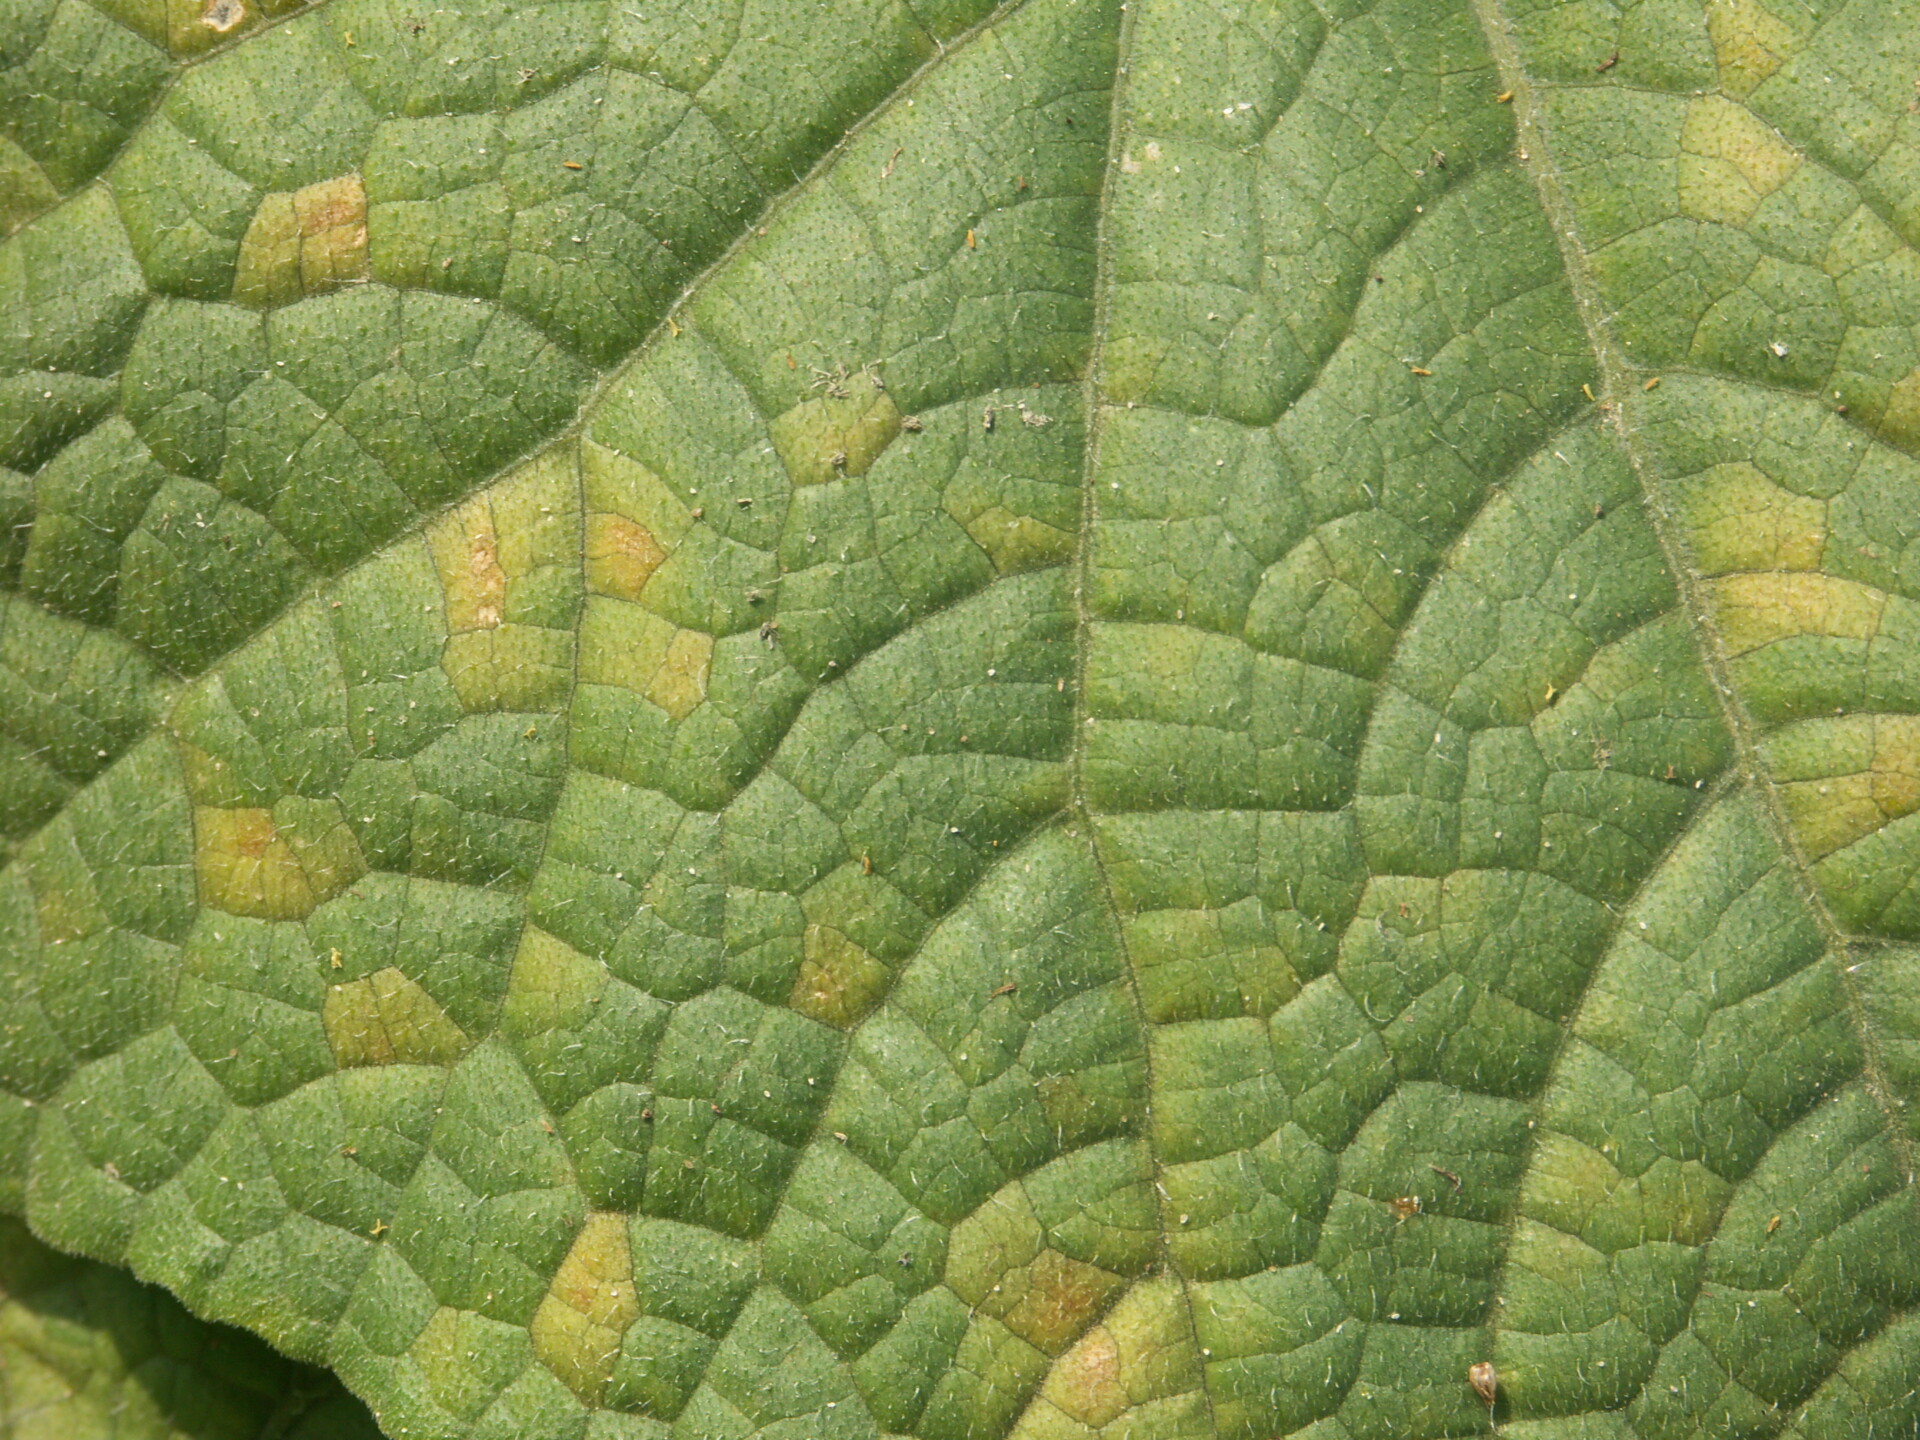 Figure 2. Downy mildew of cucumber